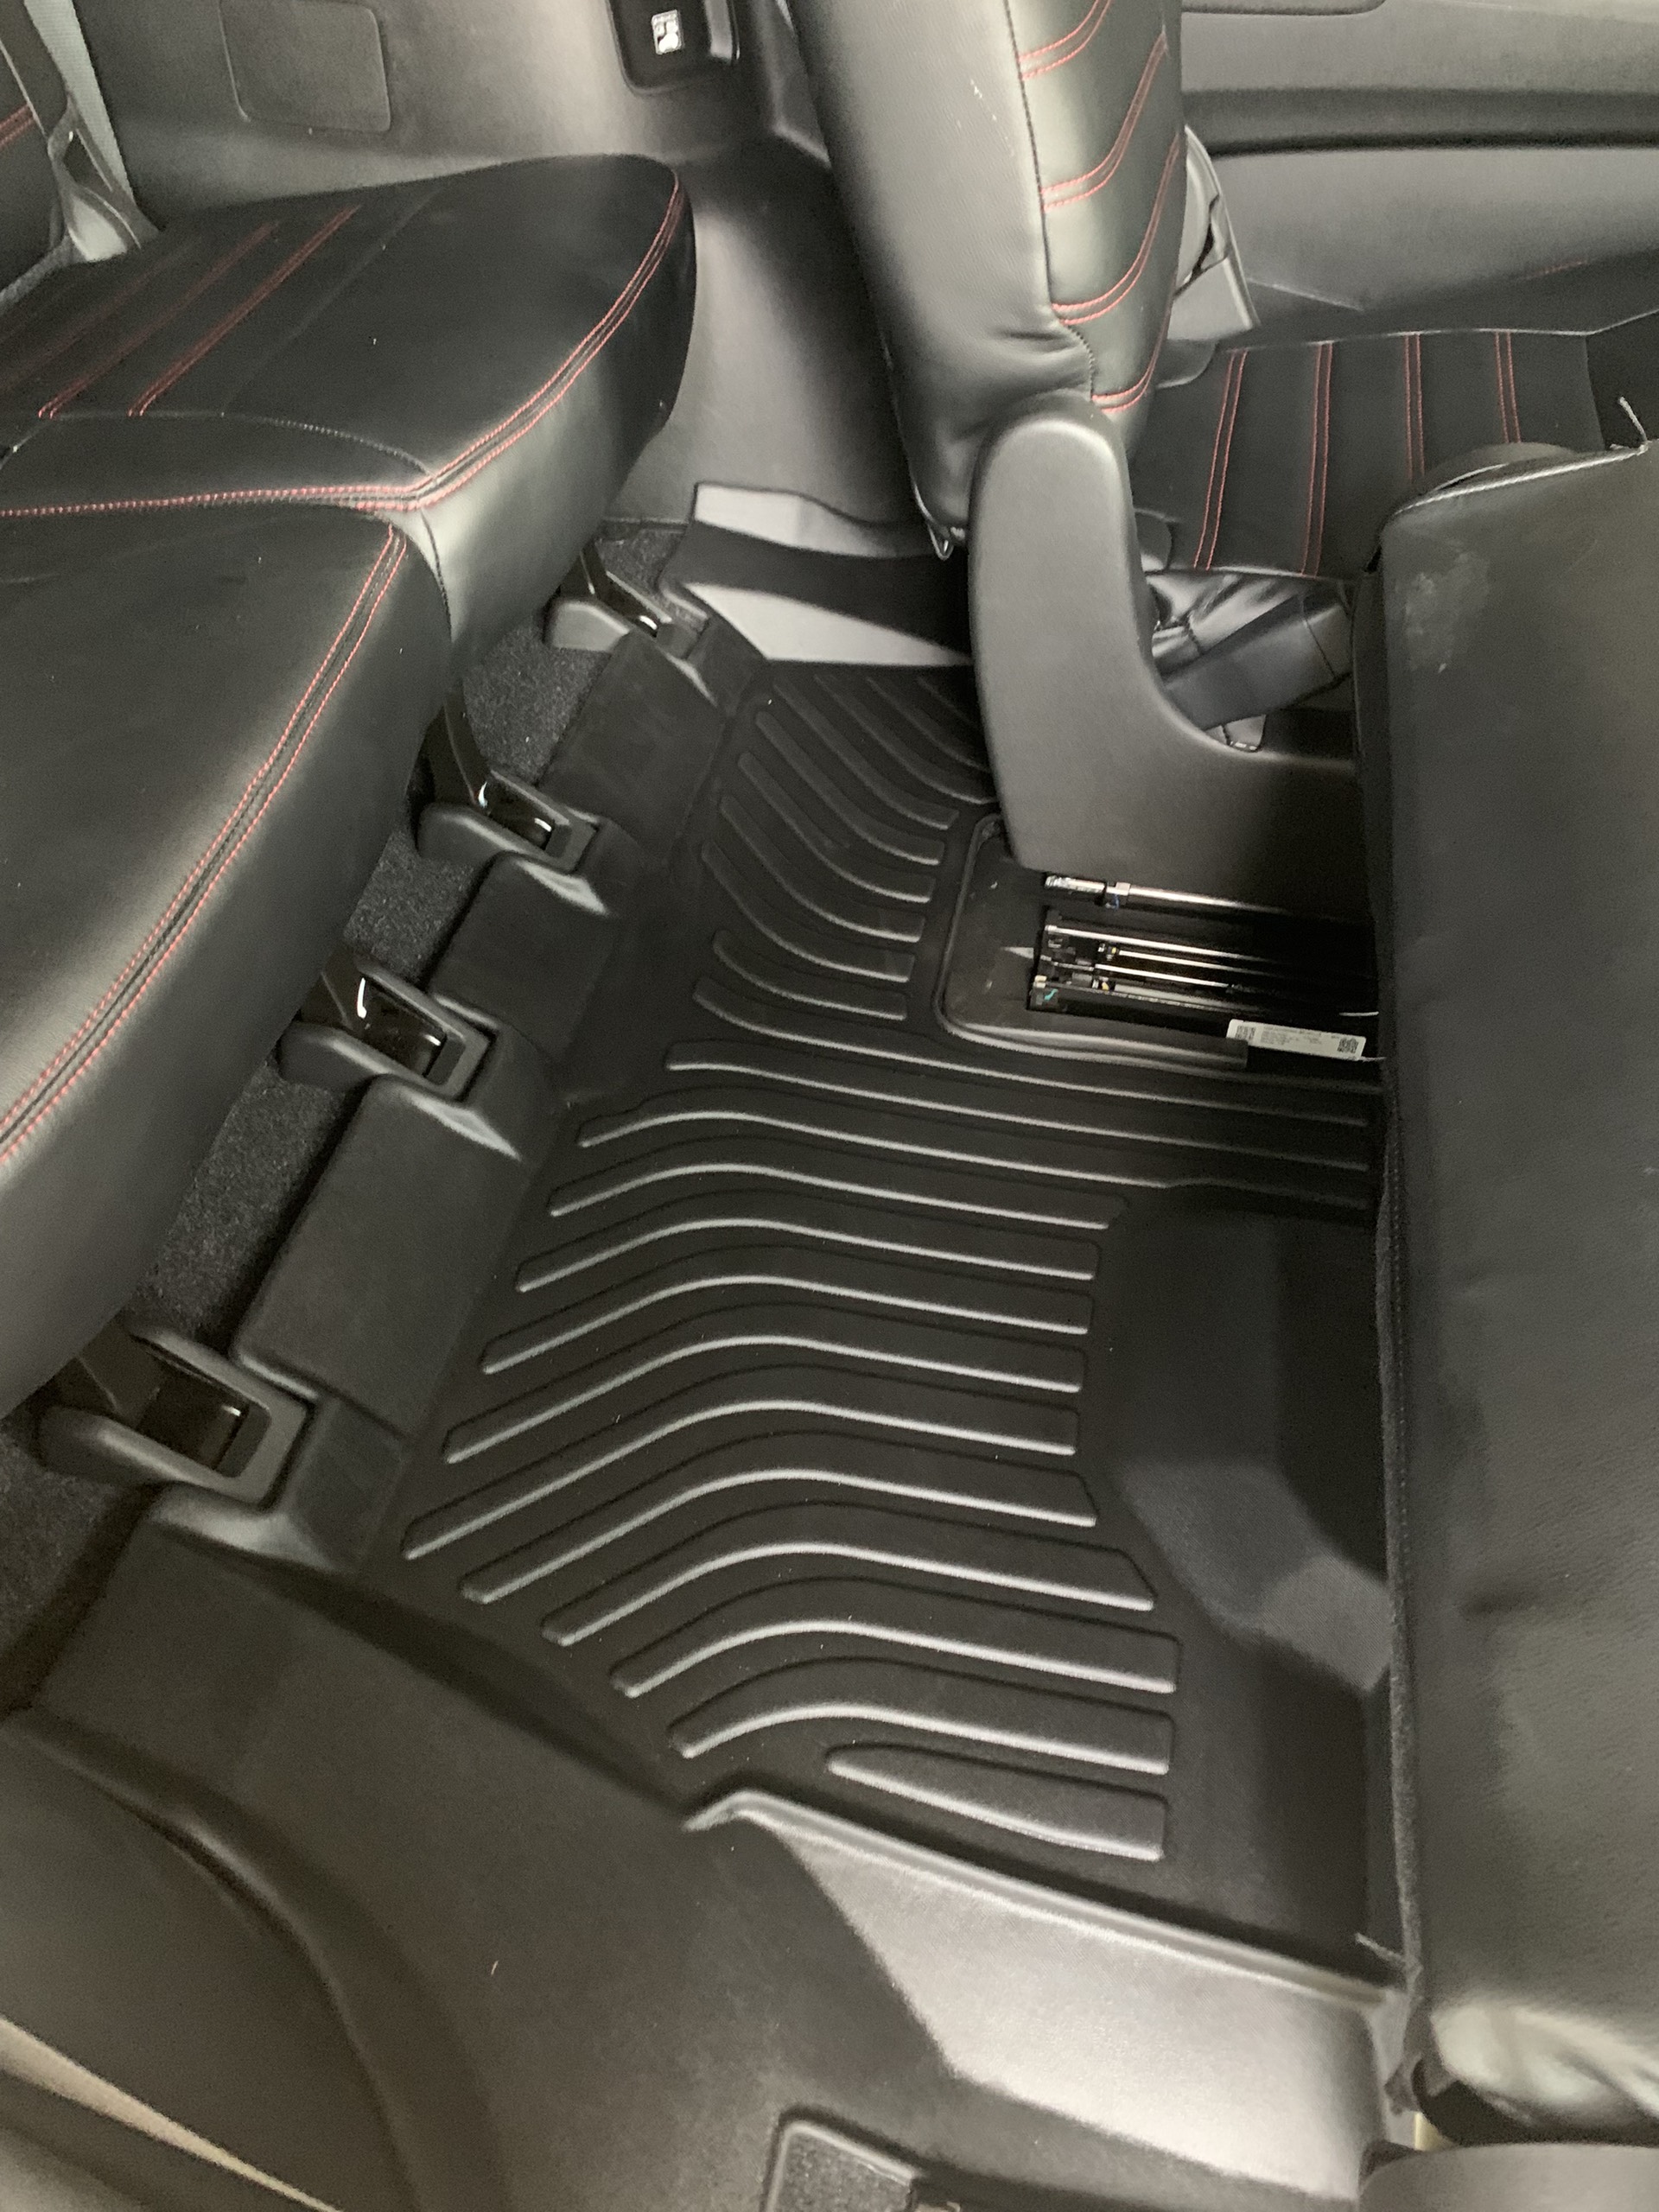 Thảm lót sàn xe ô tô Suzuki XL7/ Suzuki Ertigar ( 3 hàng ghế) Nhãn hiệu Macsim